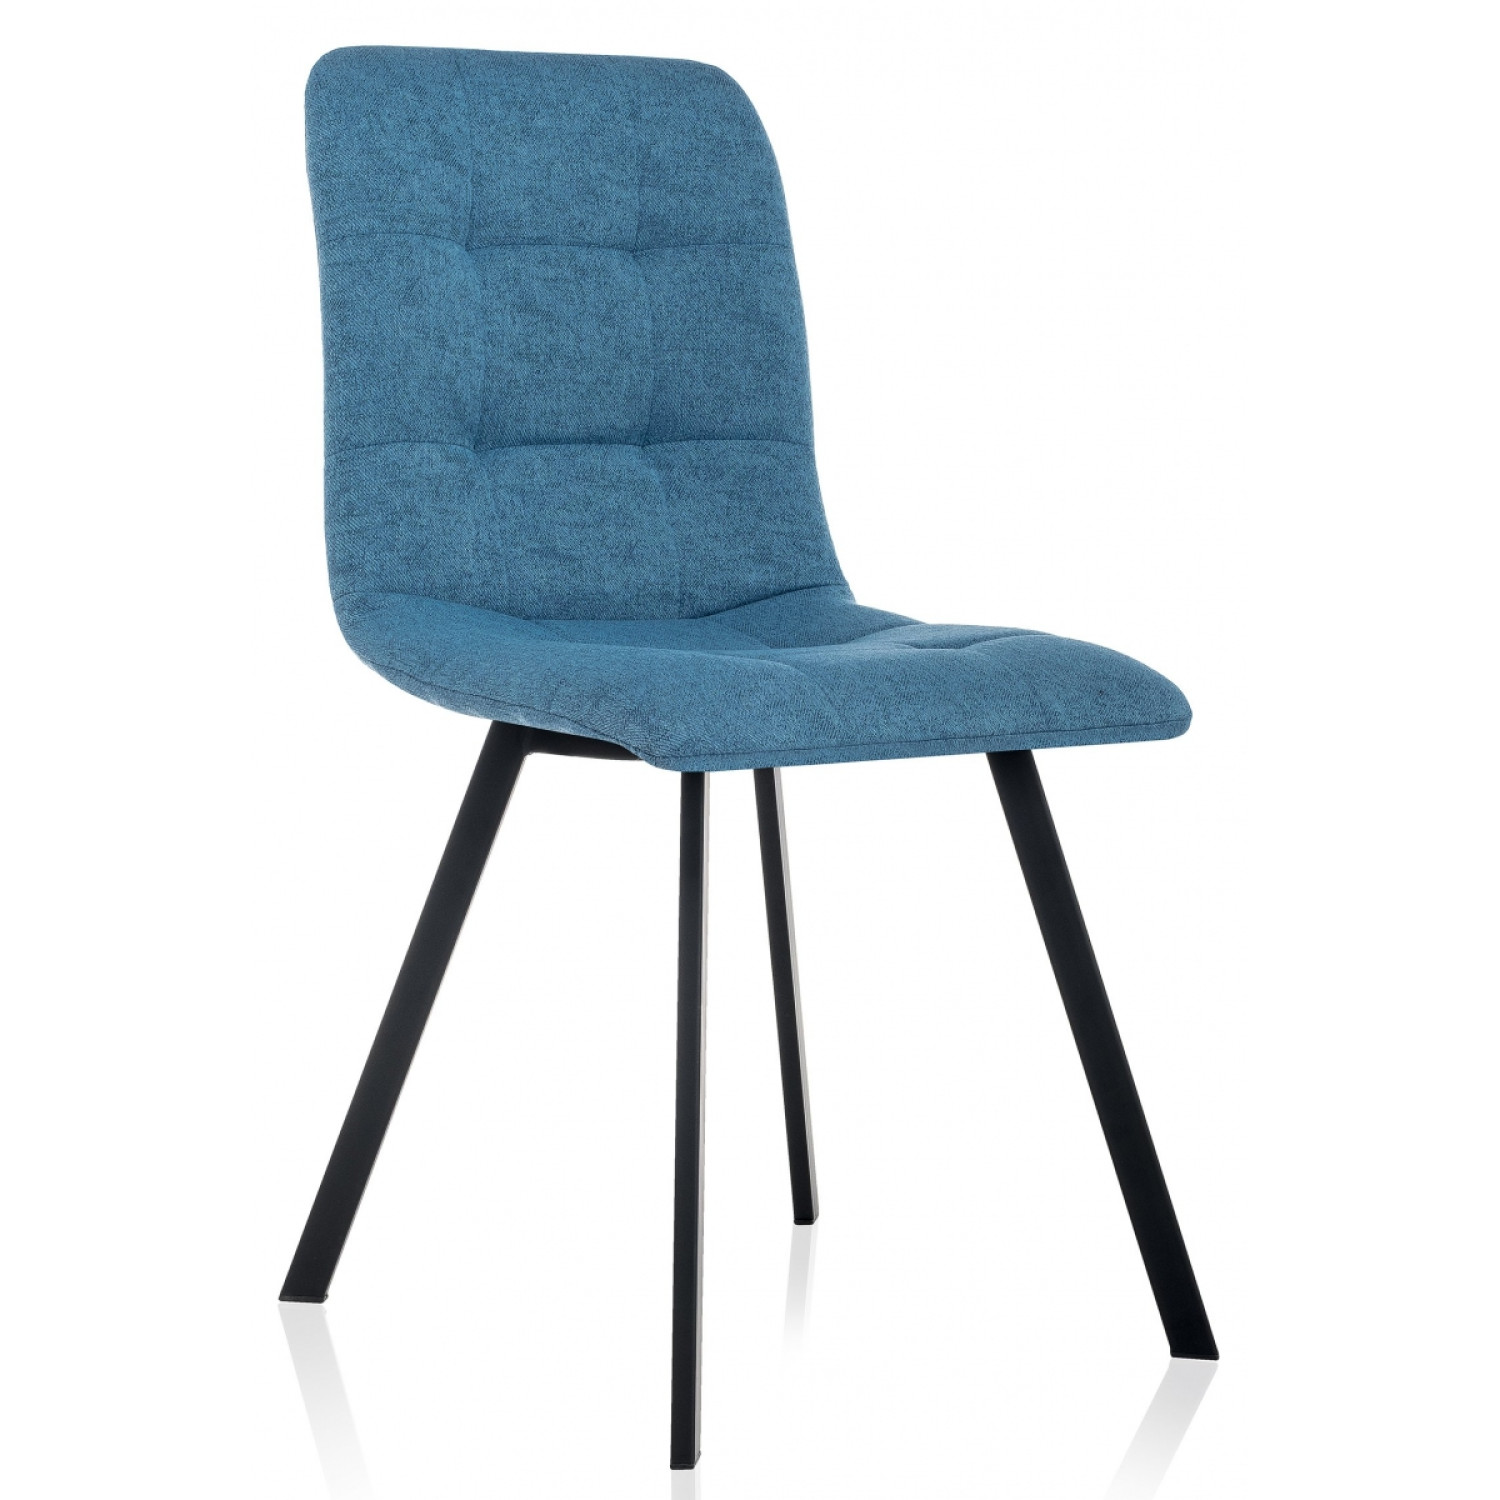 Стулья на металлокаркасе Bruk синий фото 1 — New Style of Furniture